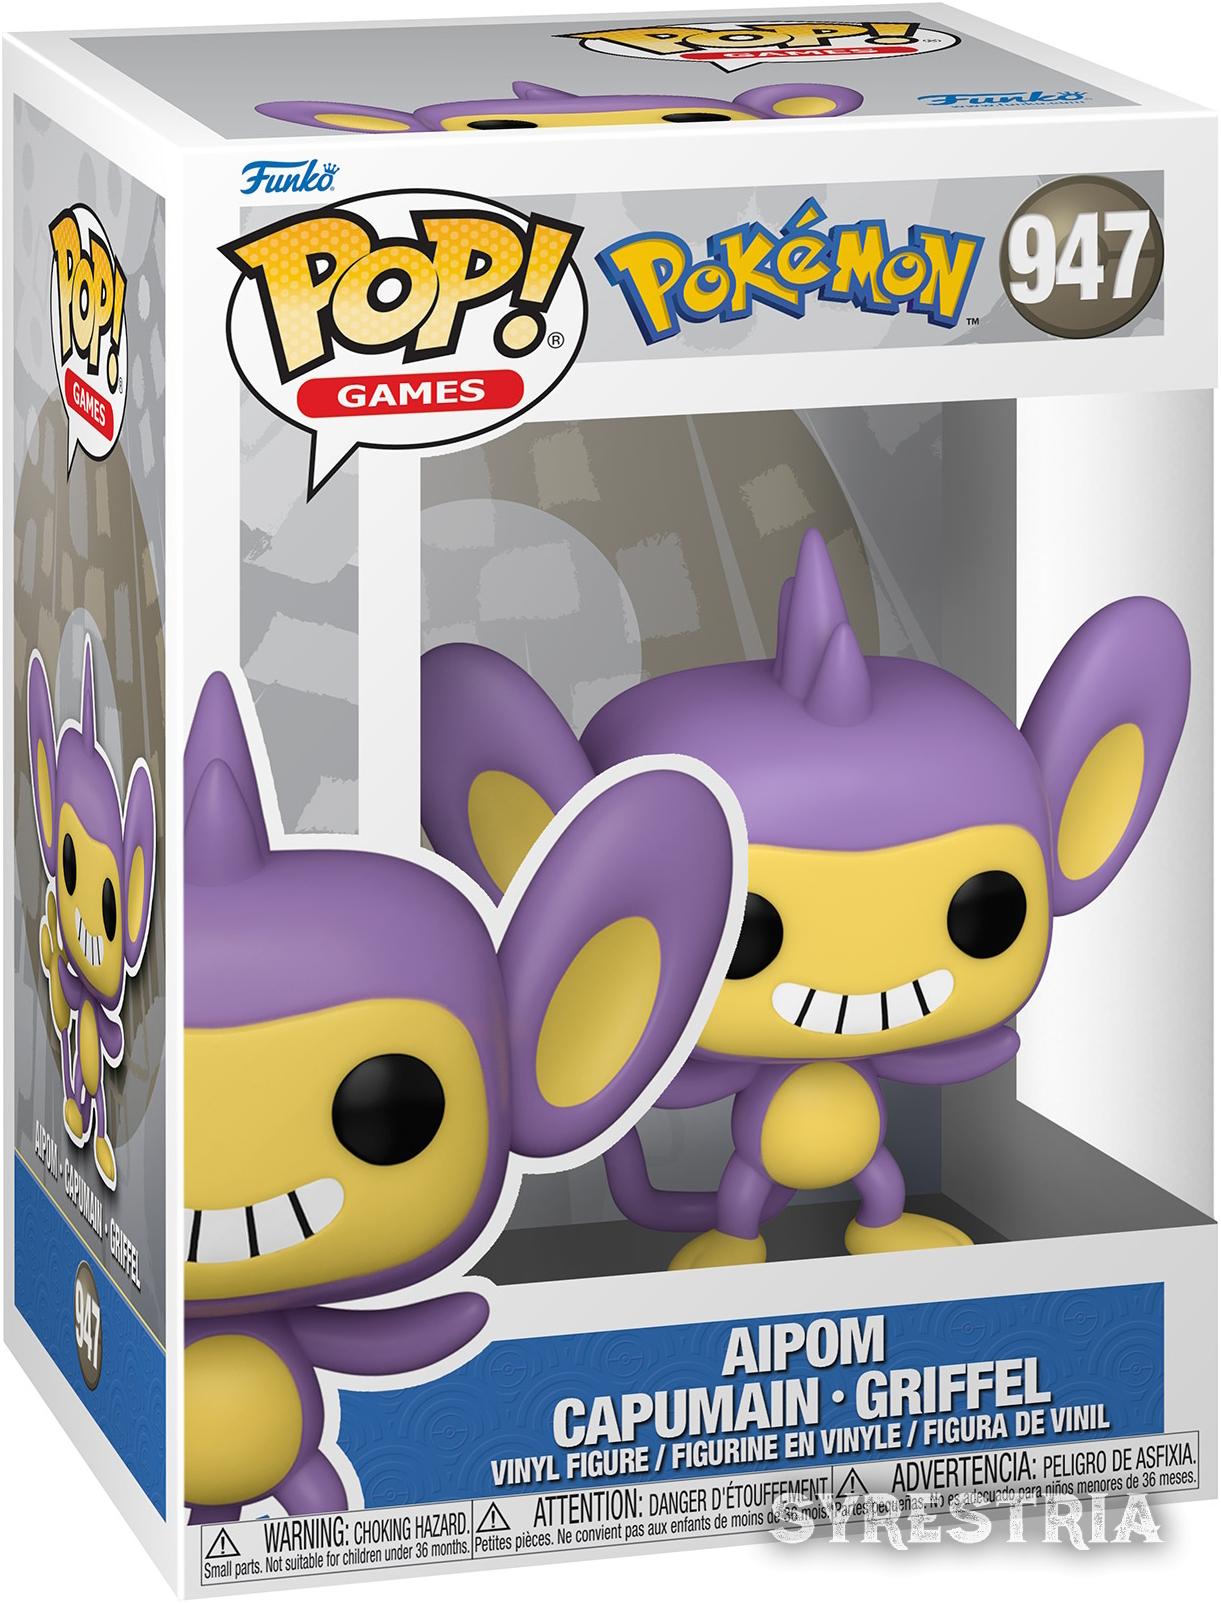 Pokémon - Aipom Capumain Griffel 947  - Funko Pop! Vinyl Figur